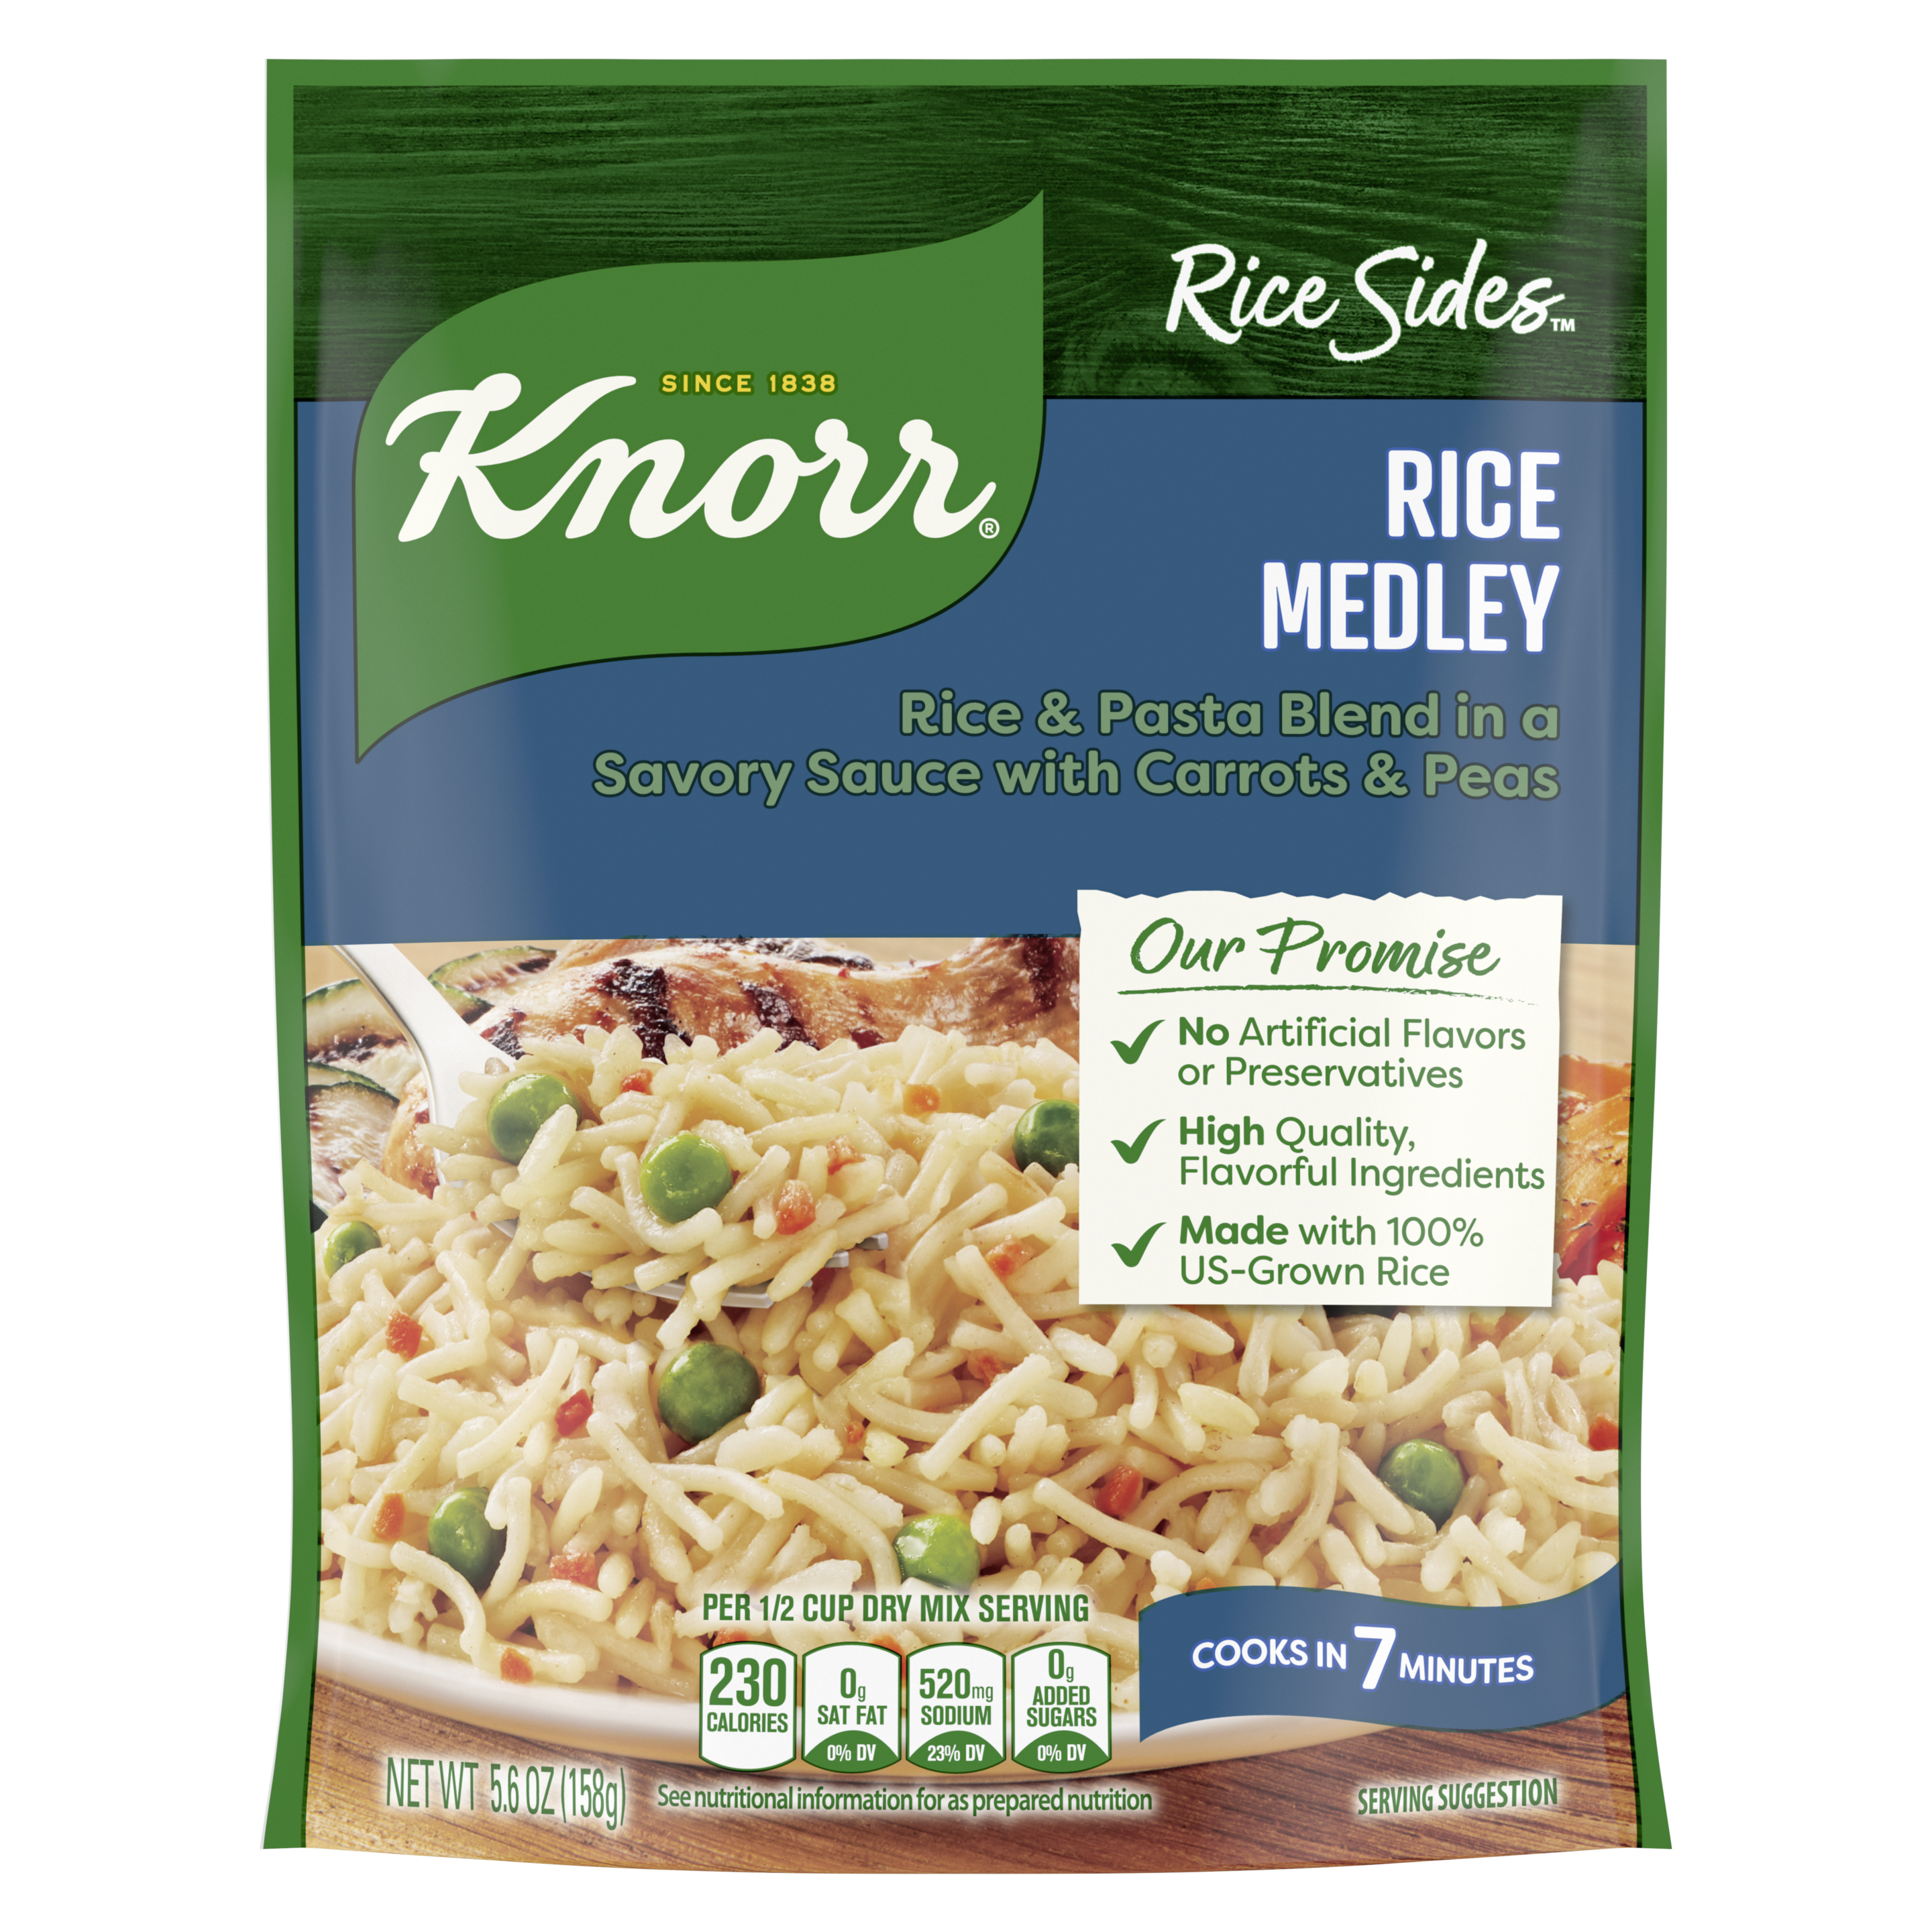 Rice Medley